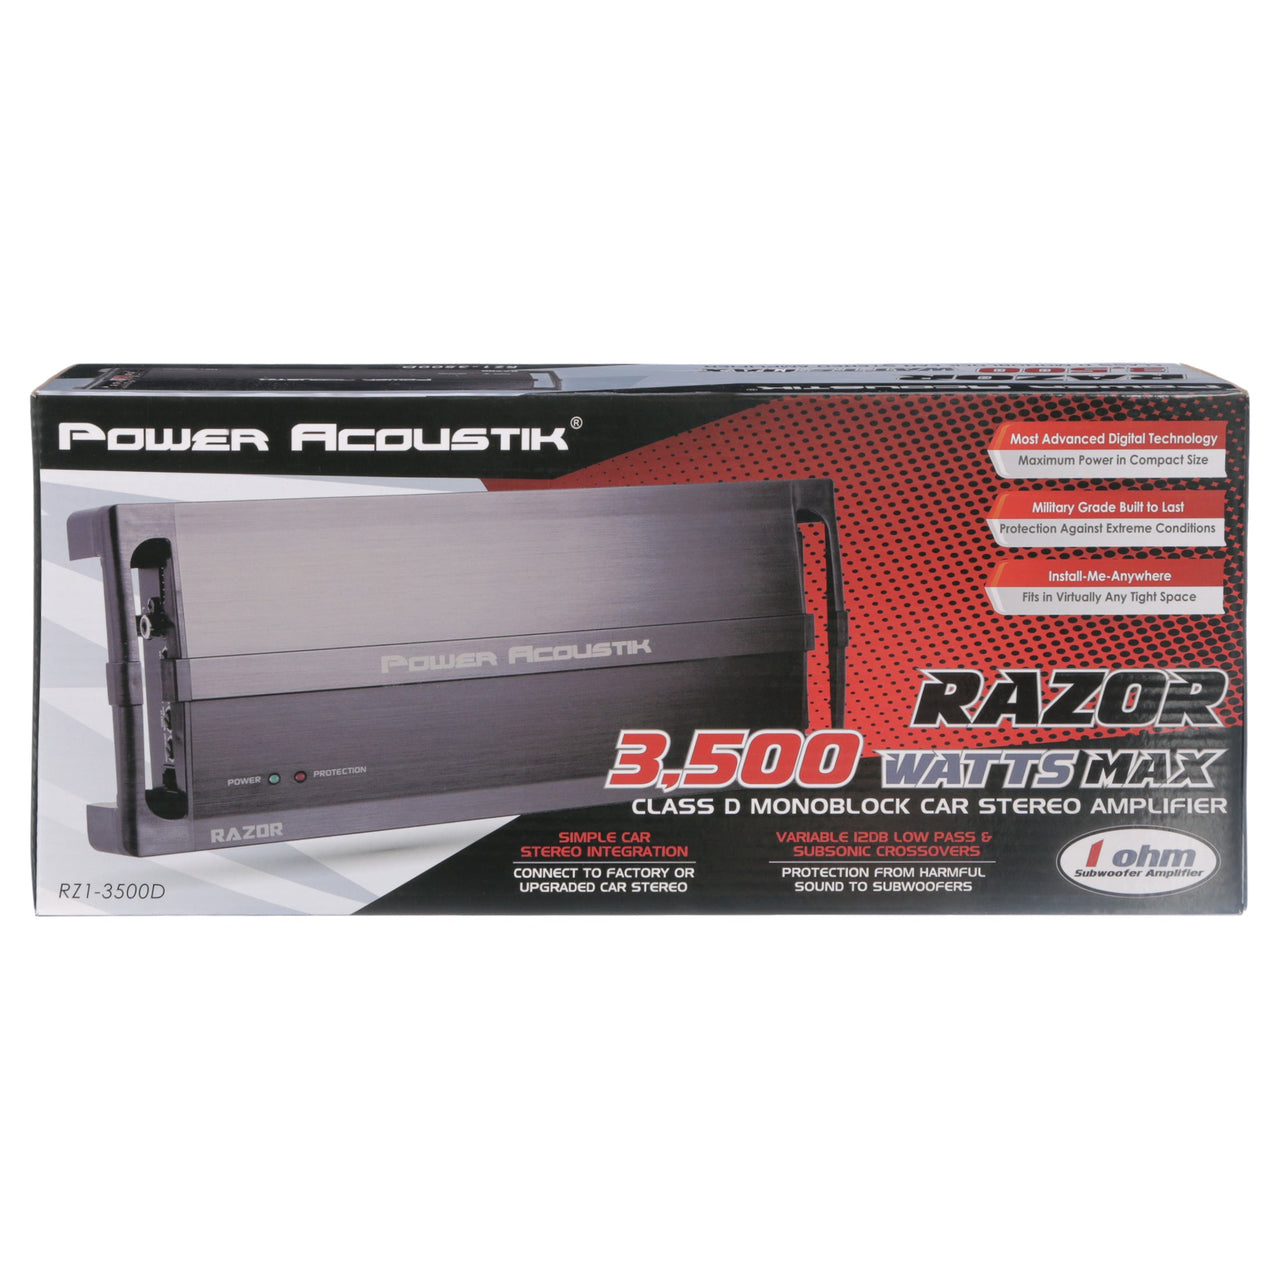 Power Acoustik RZ1-3500D RAZOR Series Monoblock Amplifier + 4 Gauge AMP Kit